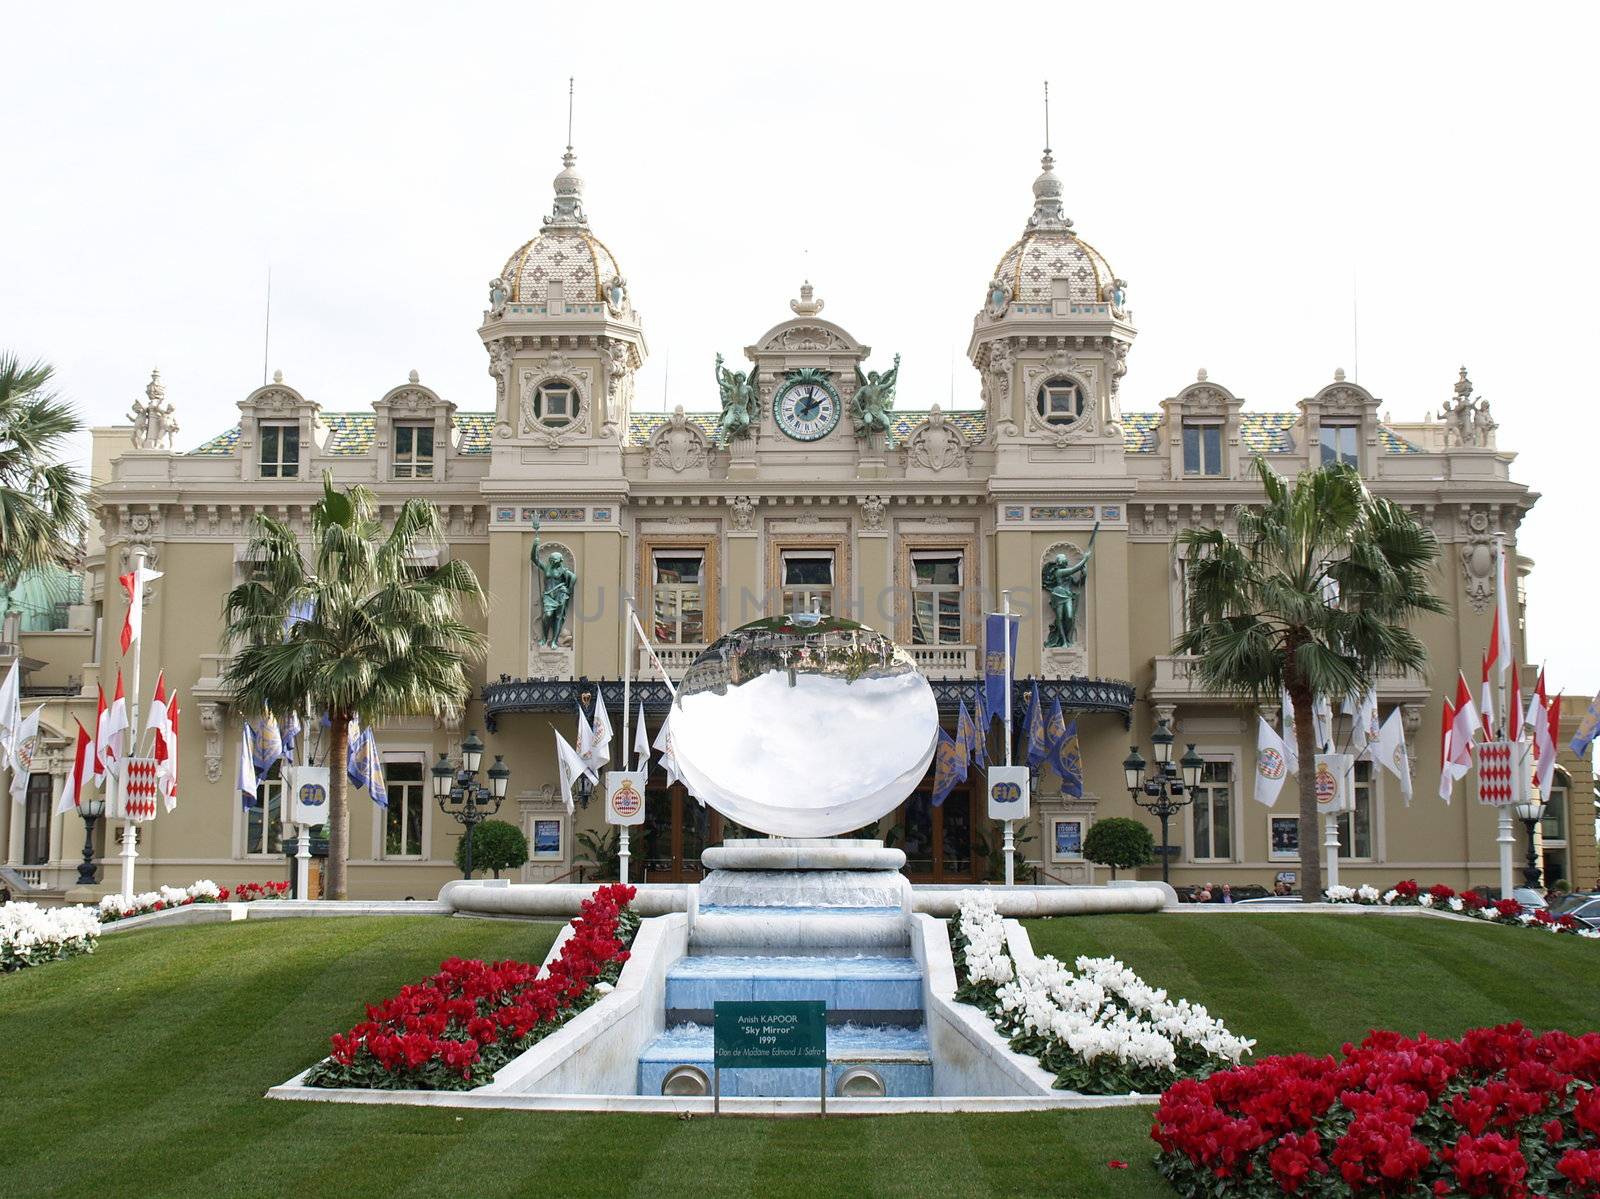 Monte Carlo casino by anderm